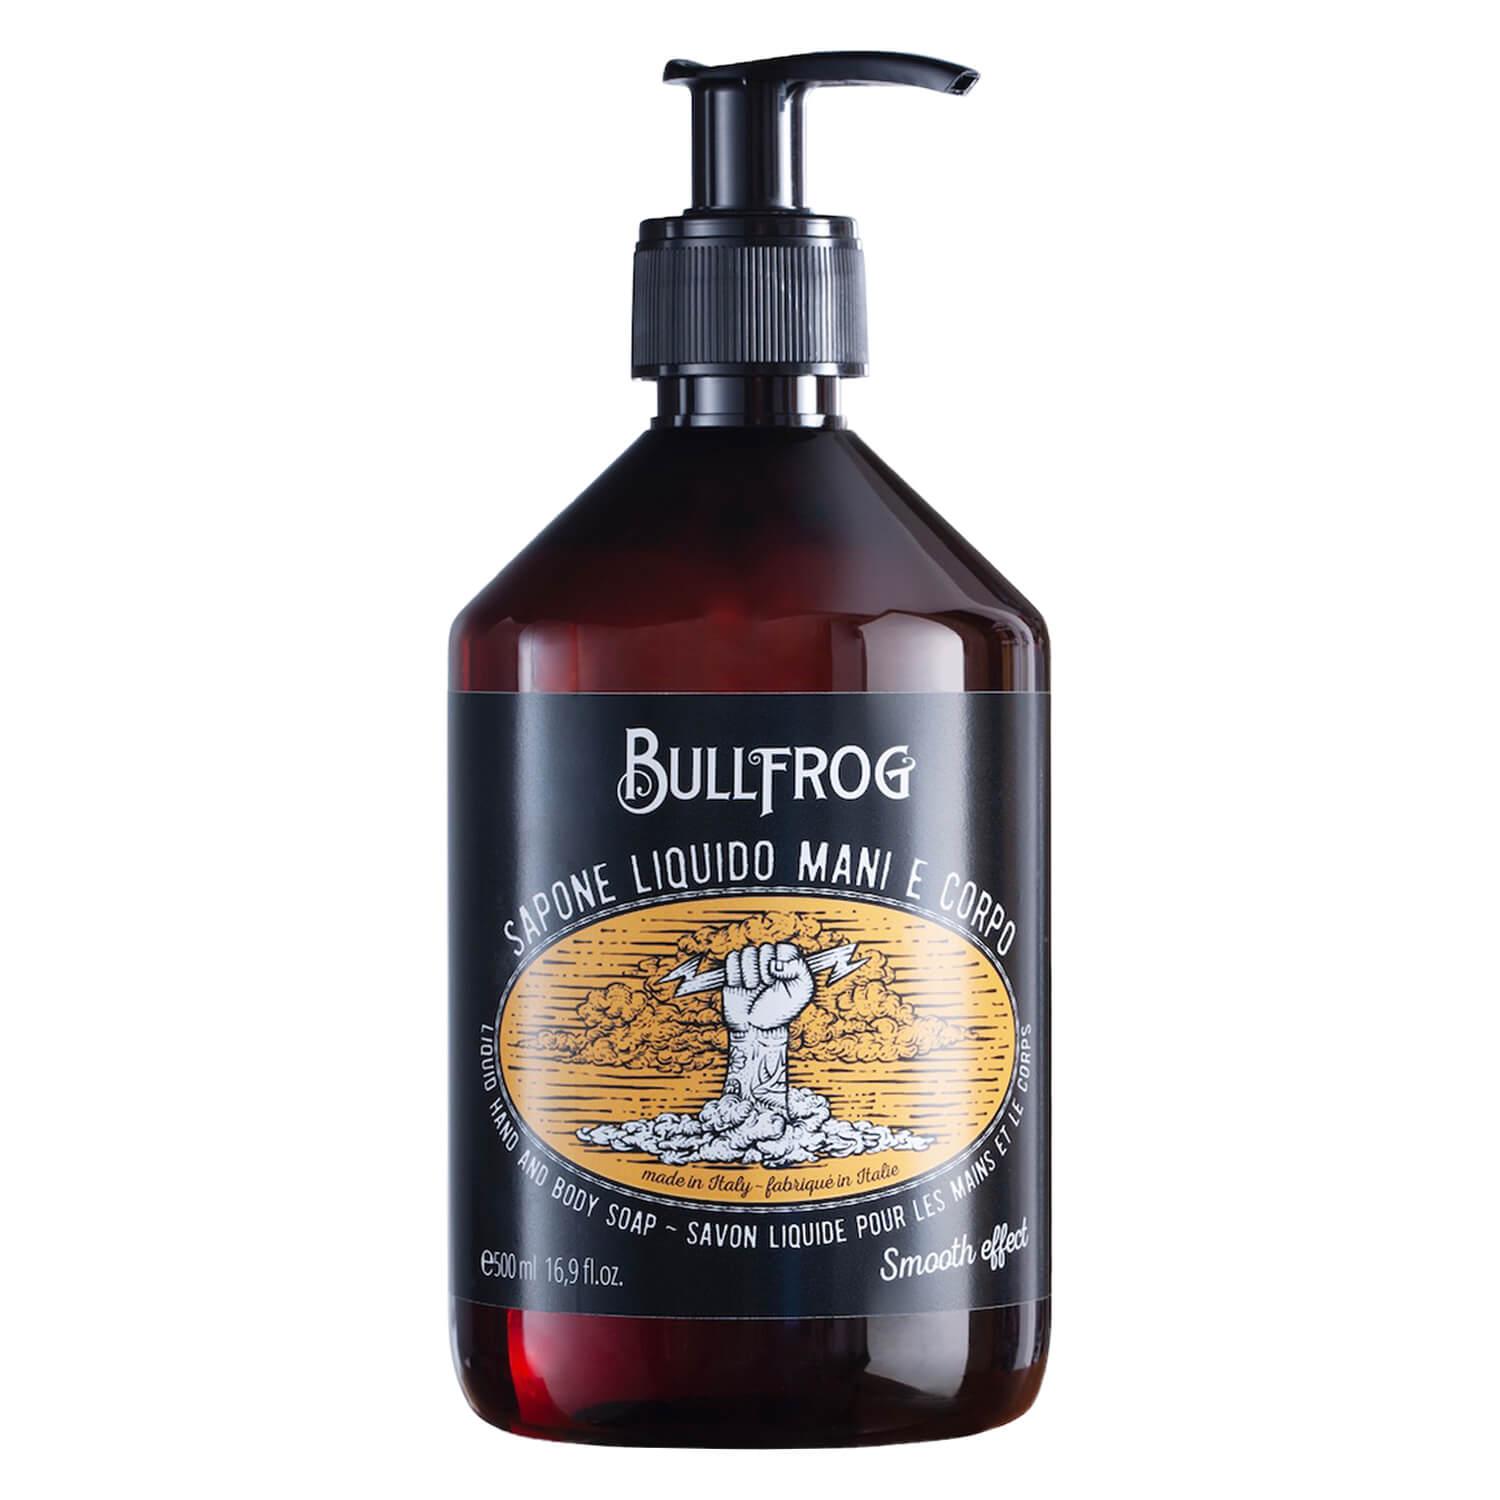 BULLFROG - Liquid Hand and Body Soap